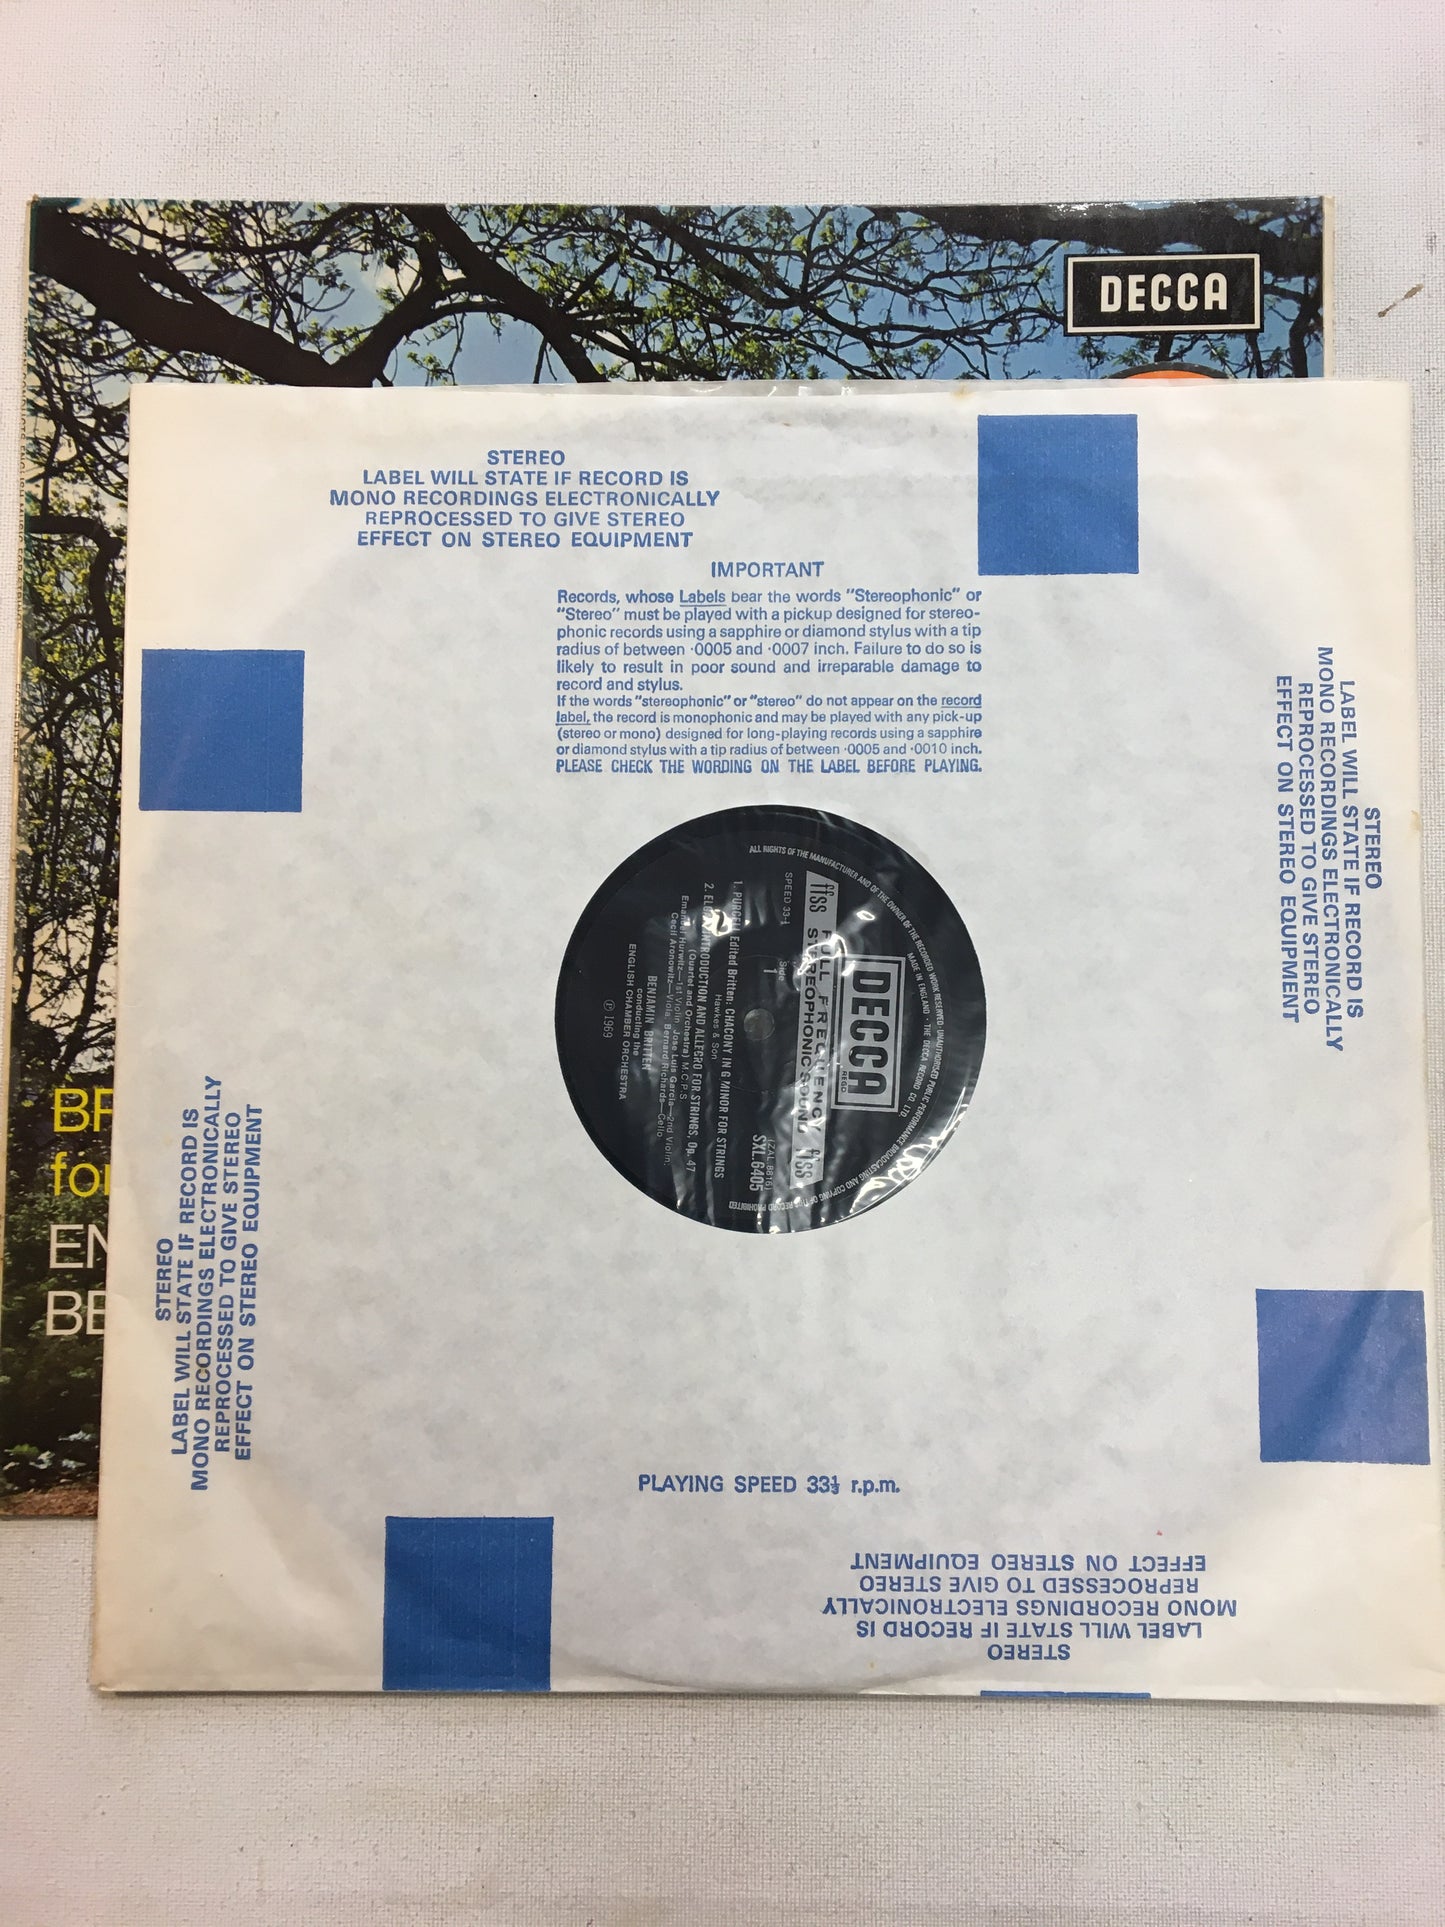 BENJAMIN BRITTEN LP ; CONDUCTS ENGLISH MUSIC